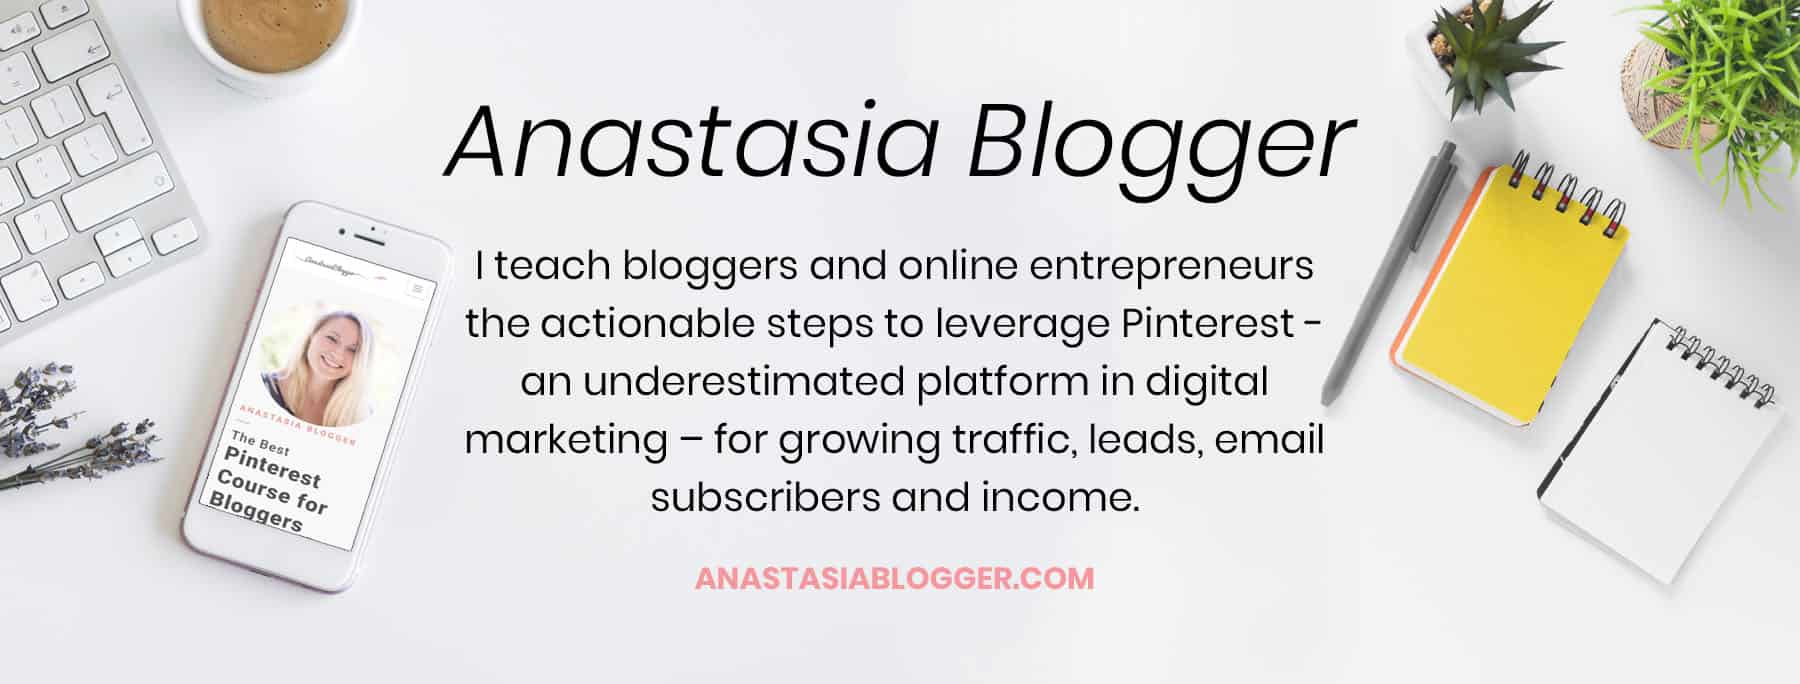 Anastasia Blogger Main Image